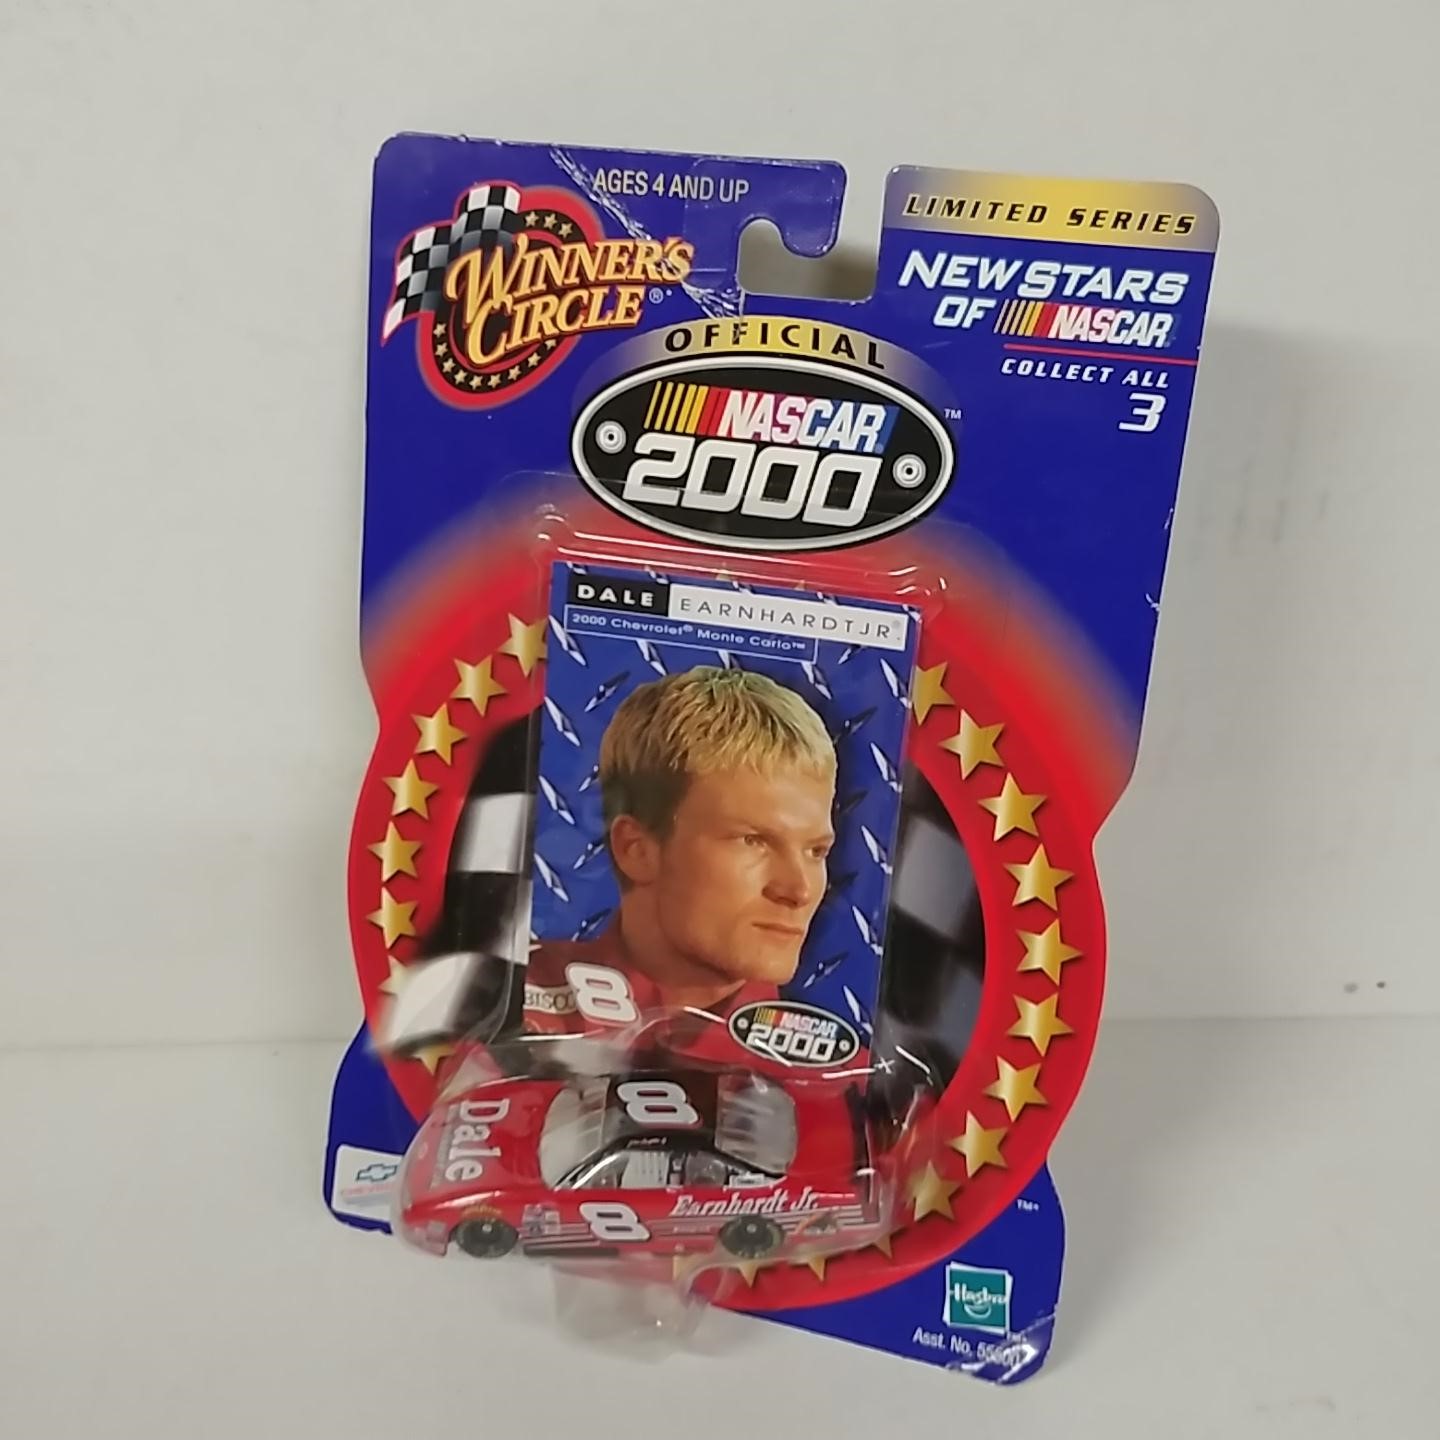 2000 Dale Earnhardt Jr 1/64th New Stars "Rookie" car